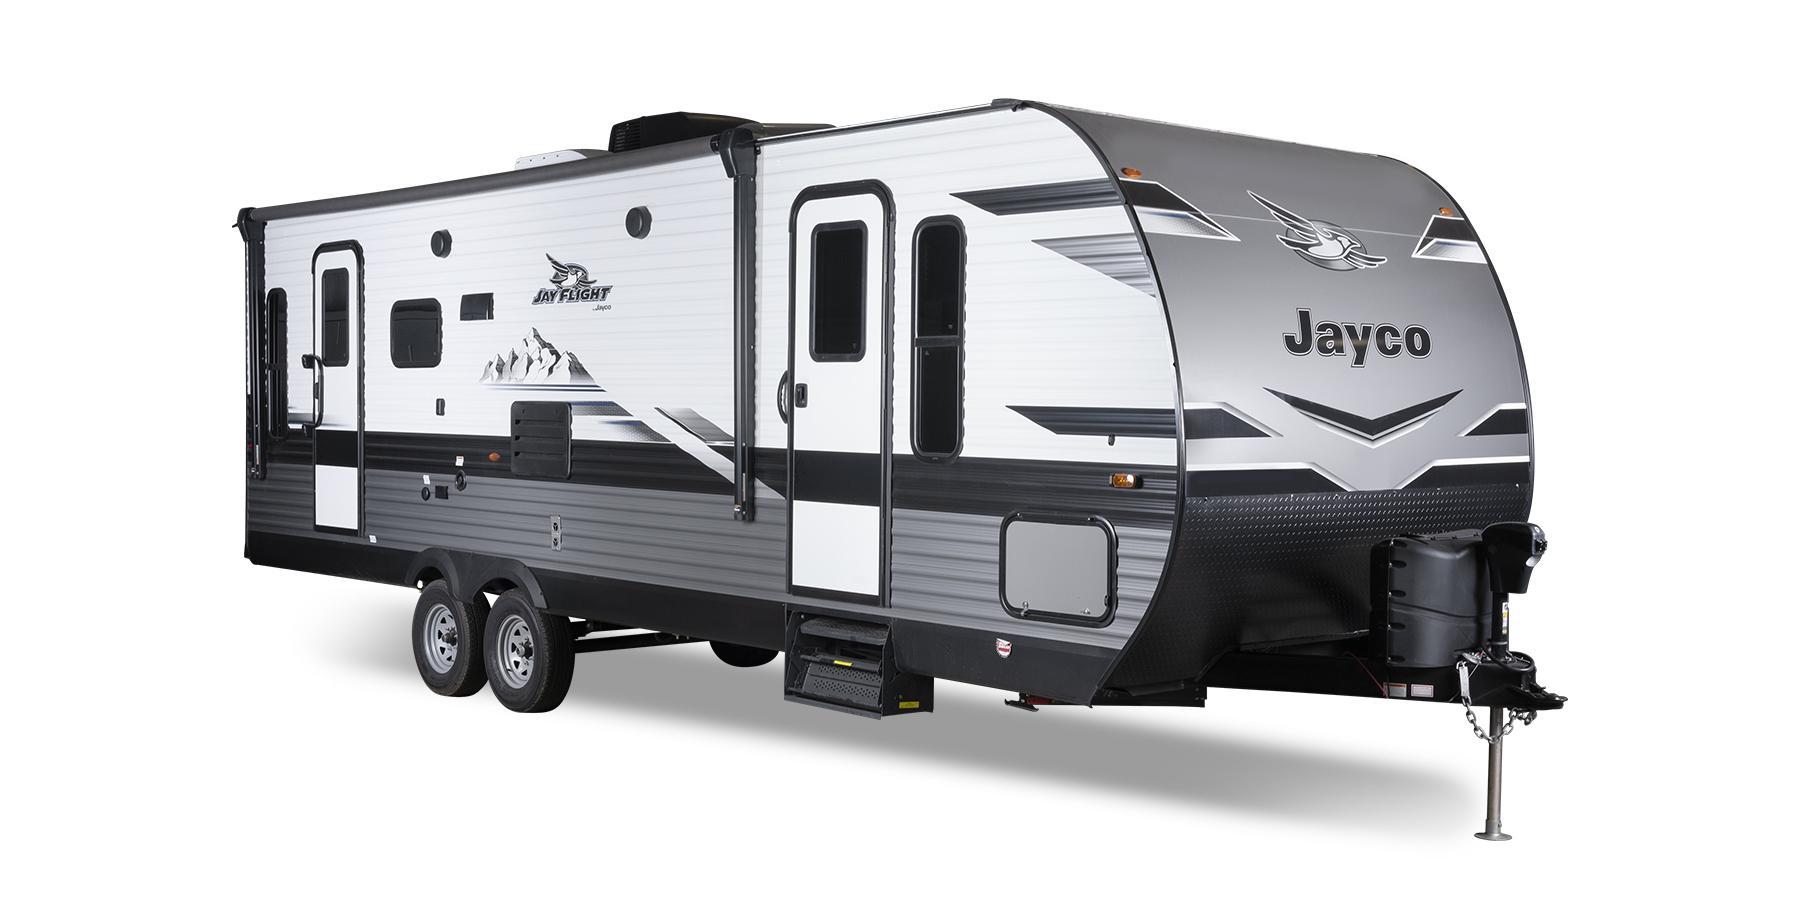 jayco travel trailers ratings